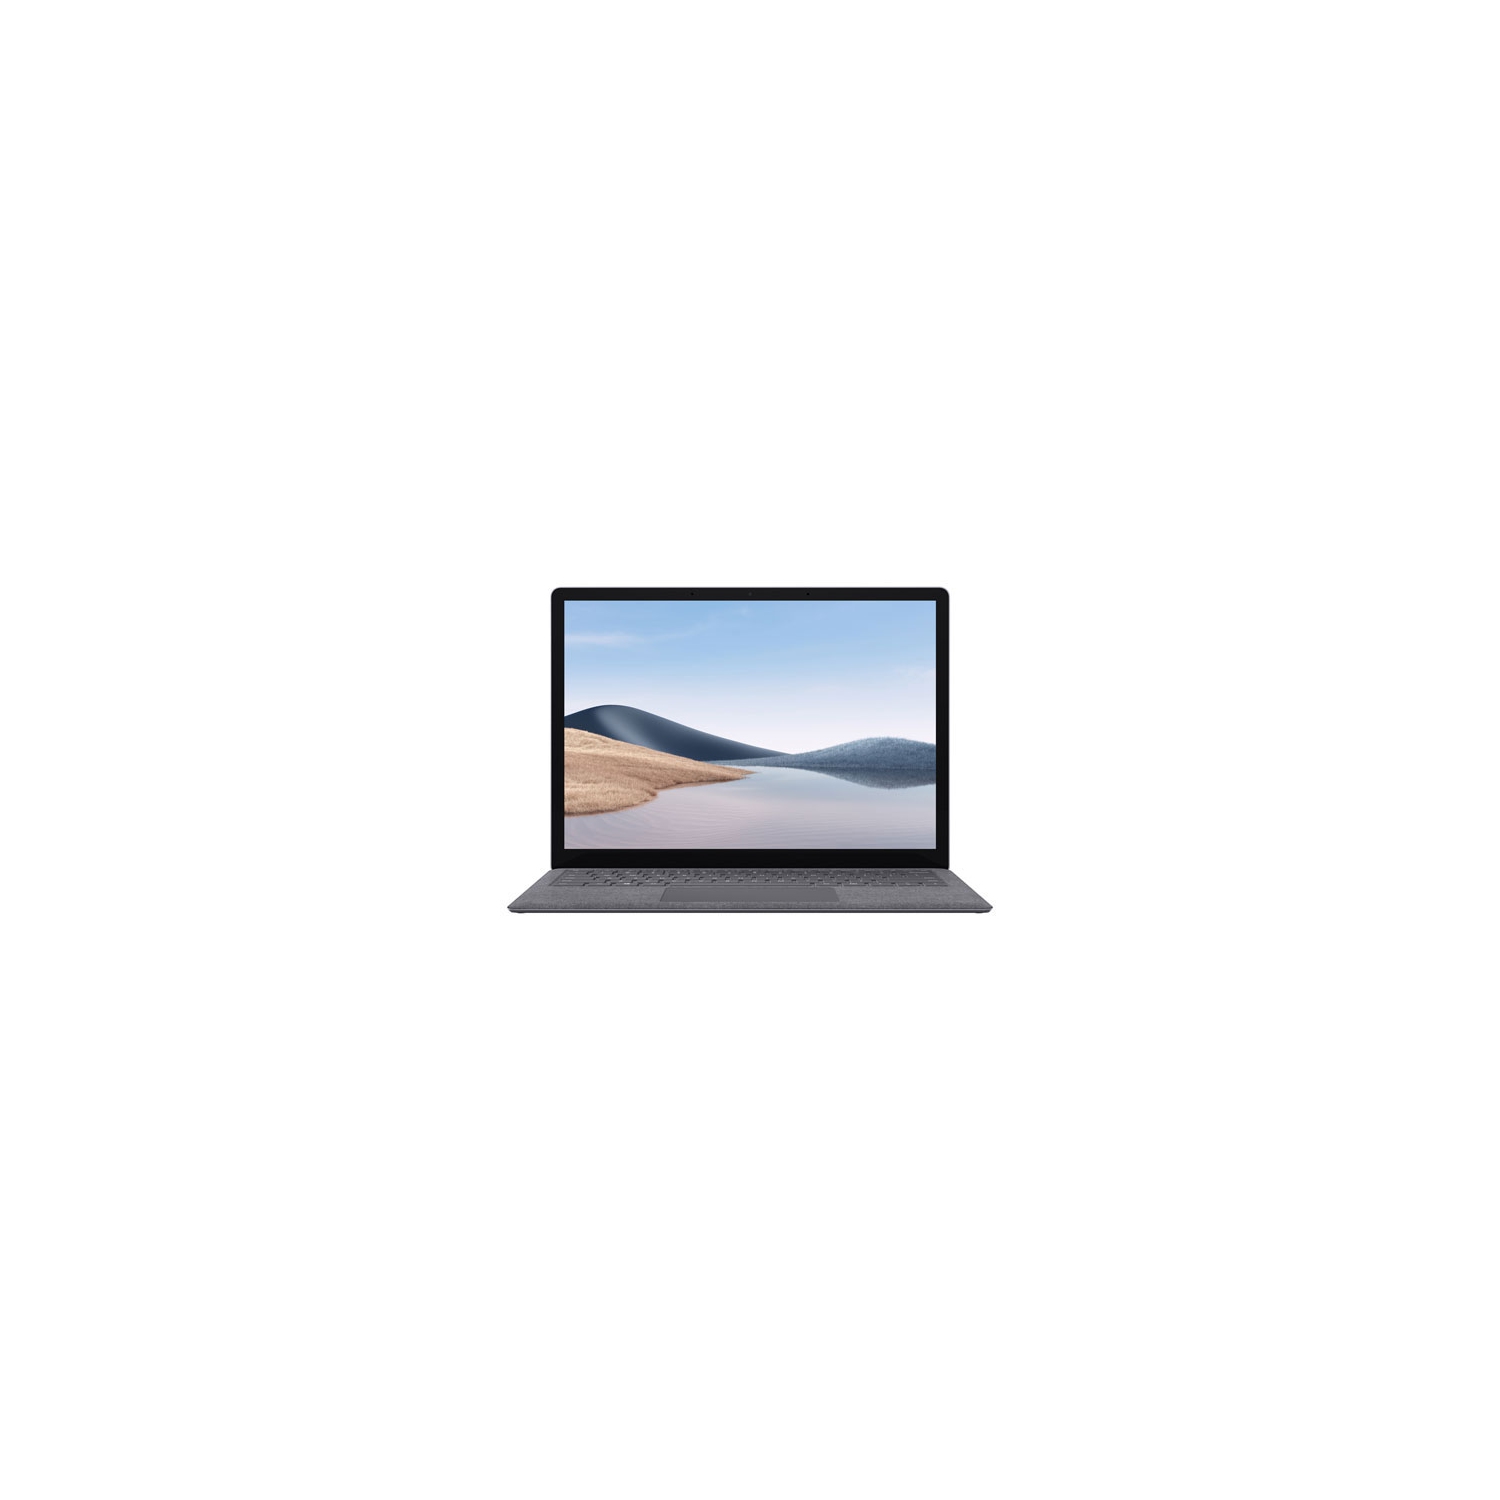 Refurbished (Good) - Microsoft Surface Laptop 4 13.5" - Platinum (AMD Ryzen 5 4680U/256GB SSD/8GB RAM) - Eng